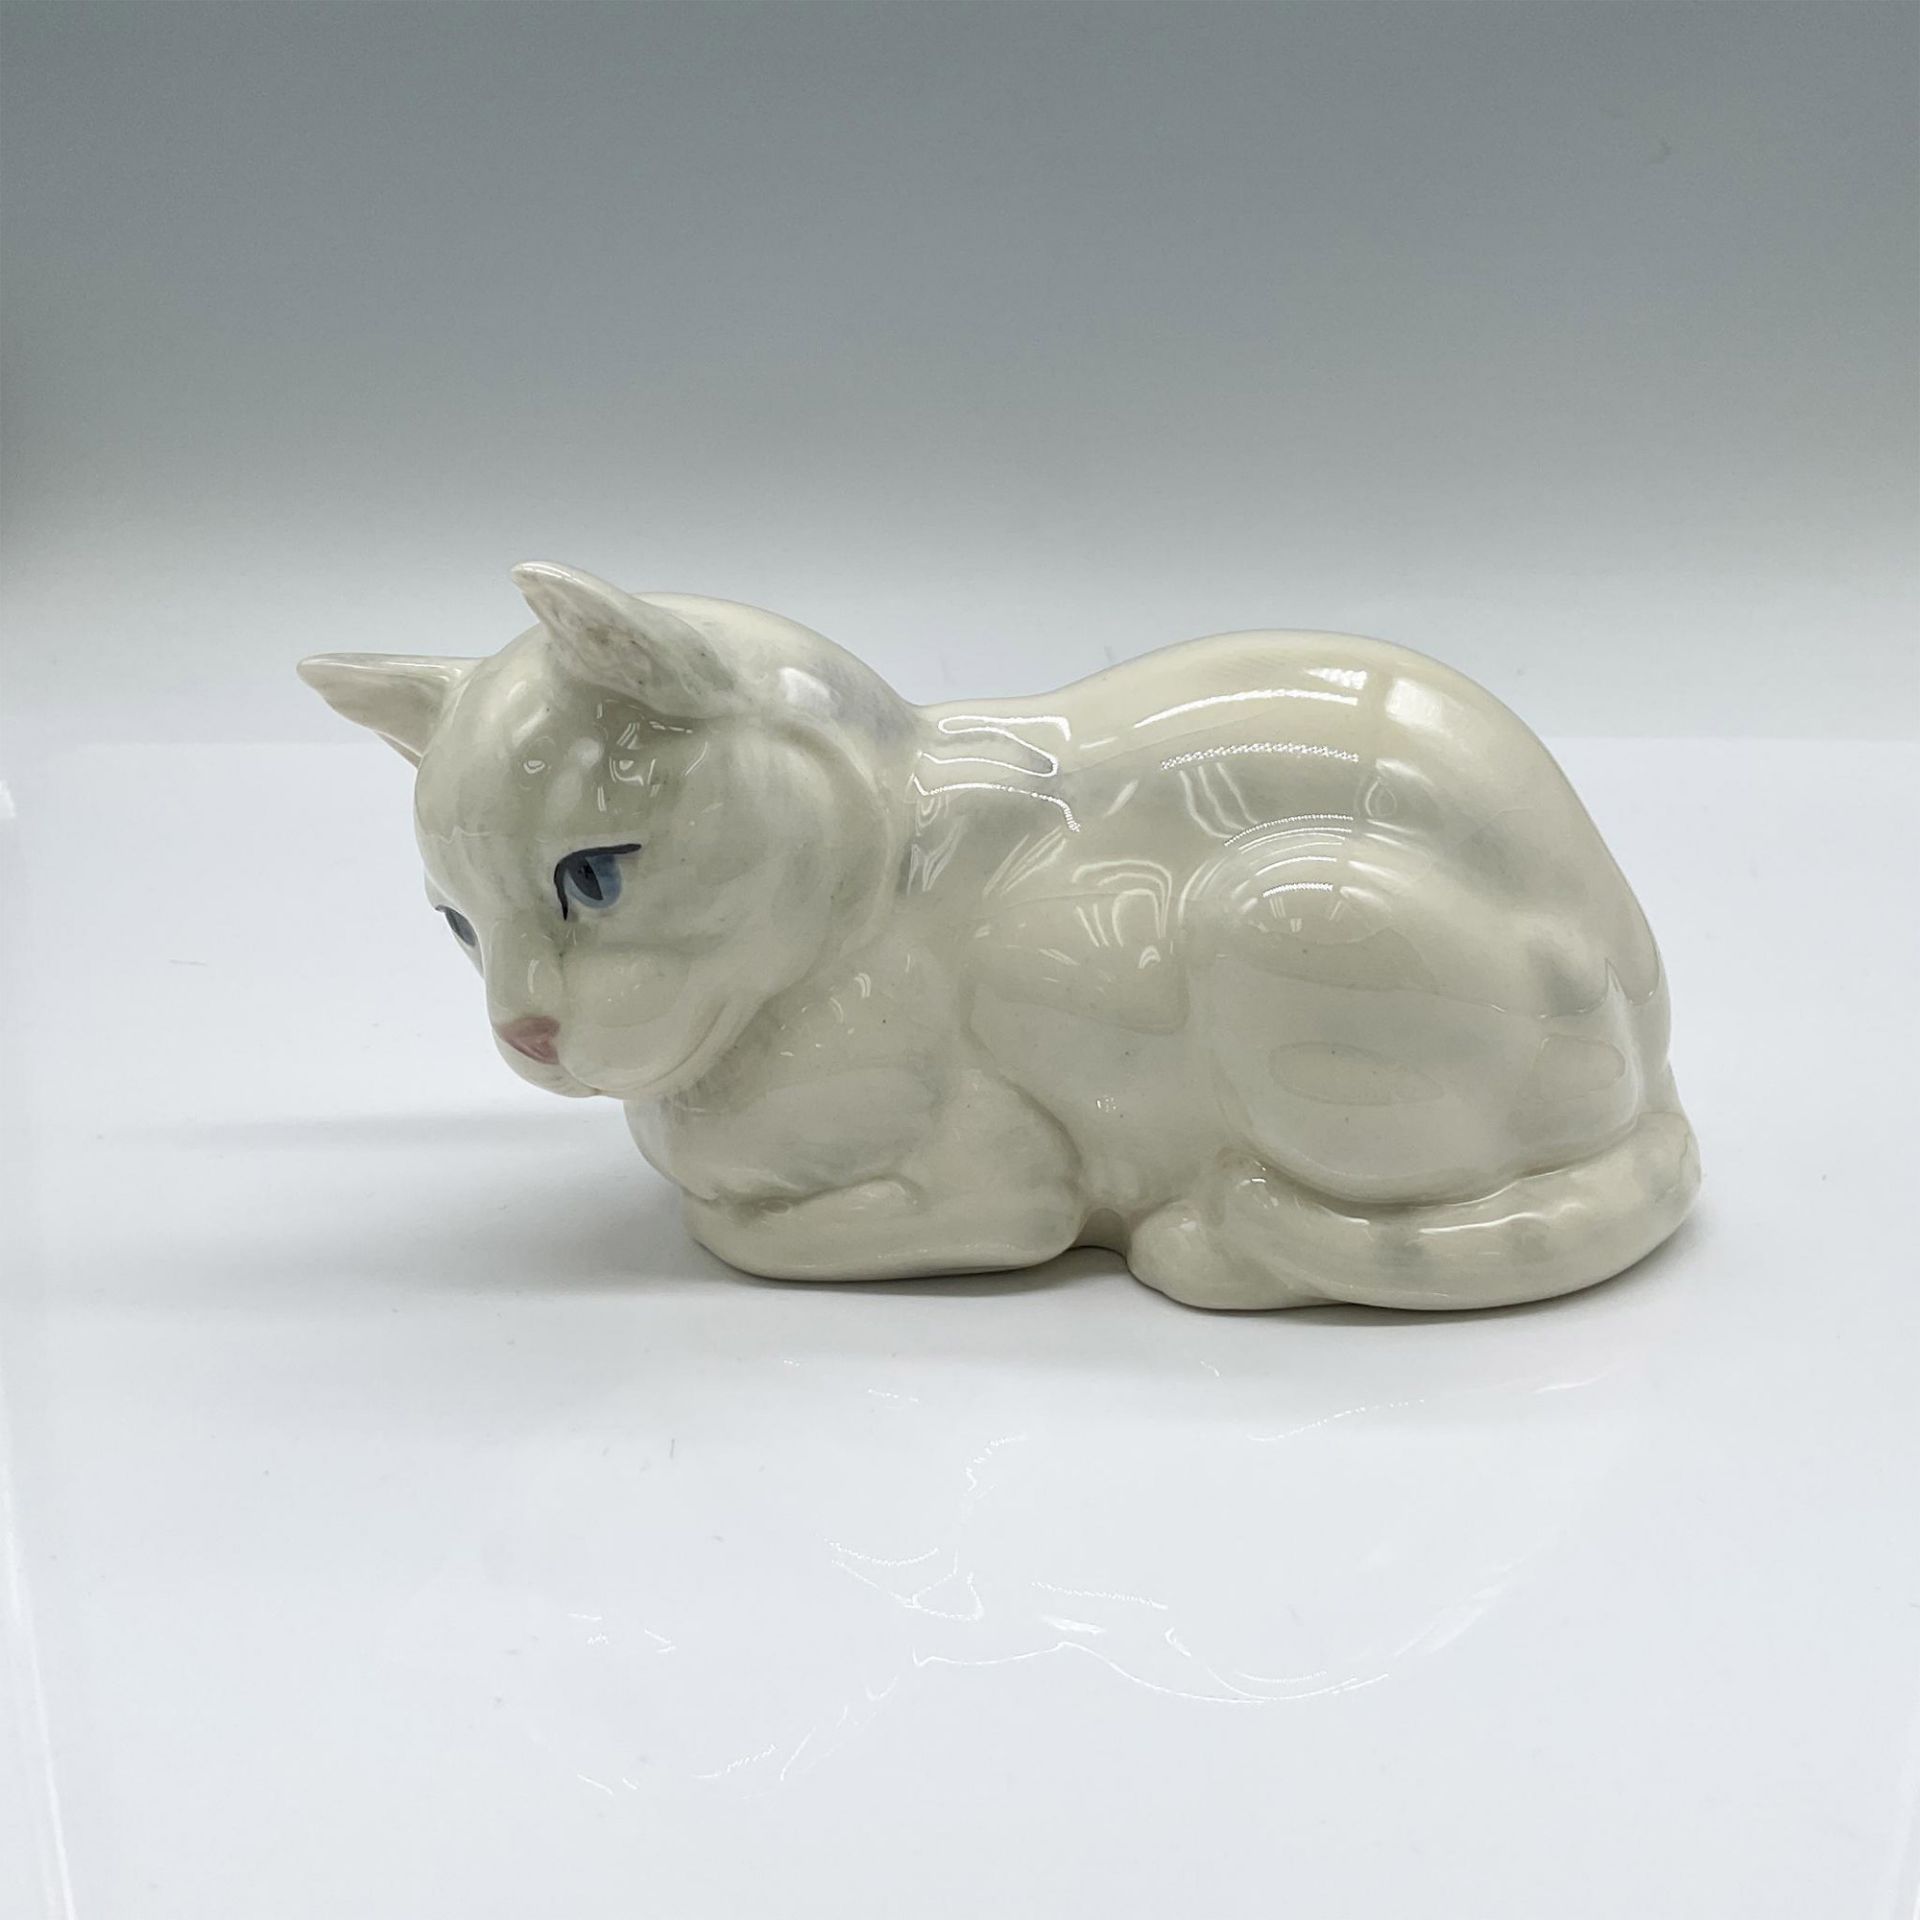 GORT Jacob Bone China Figurine, A Cat 254